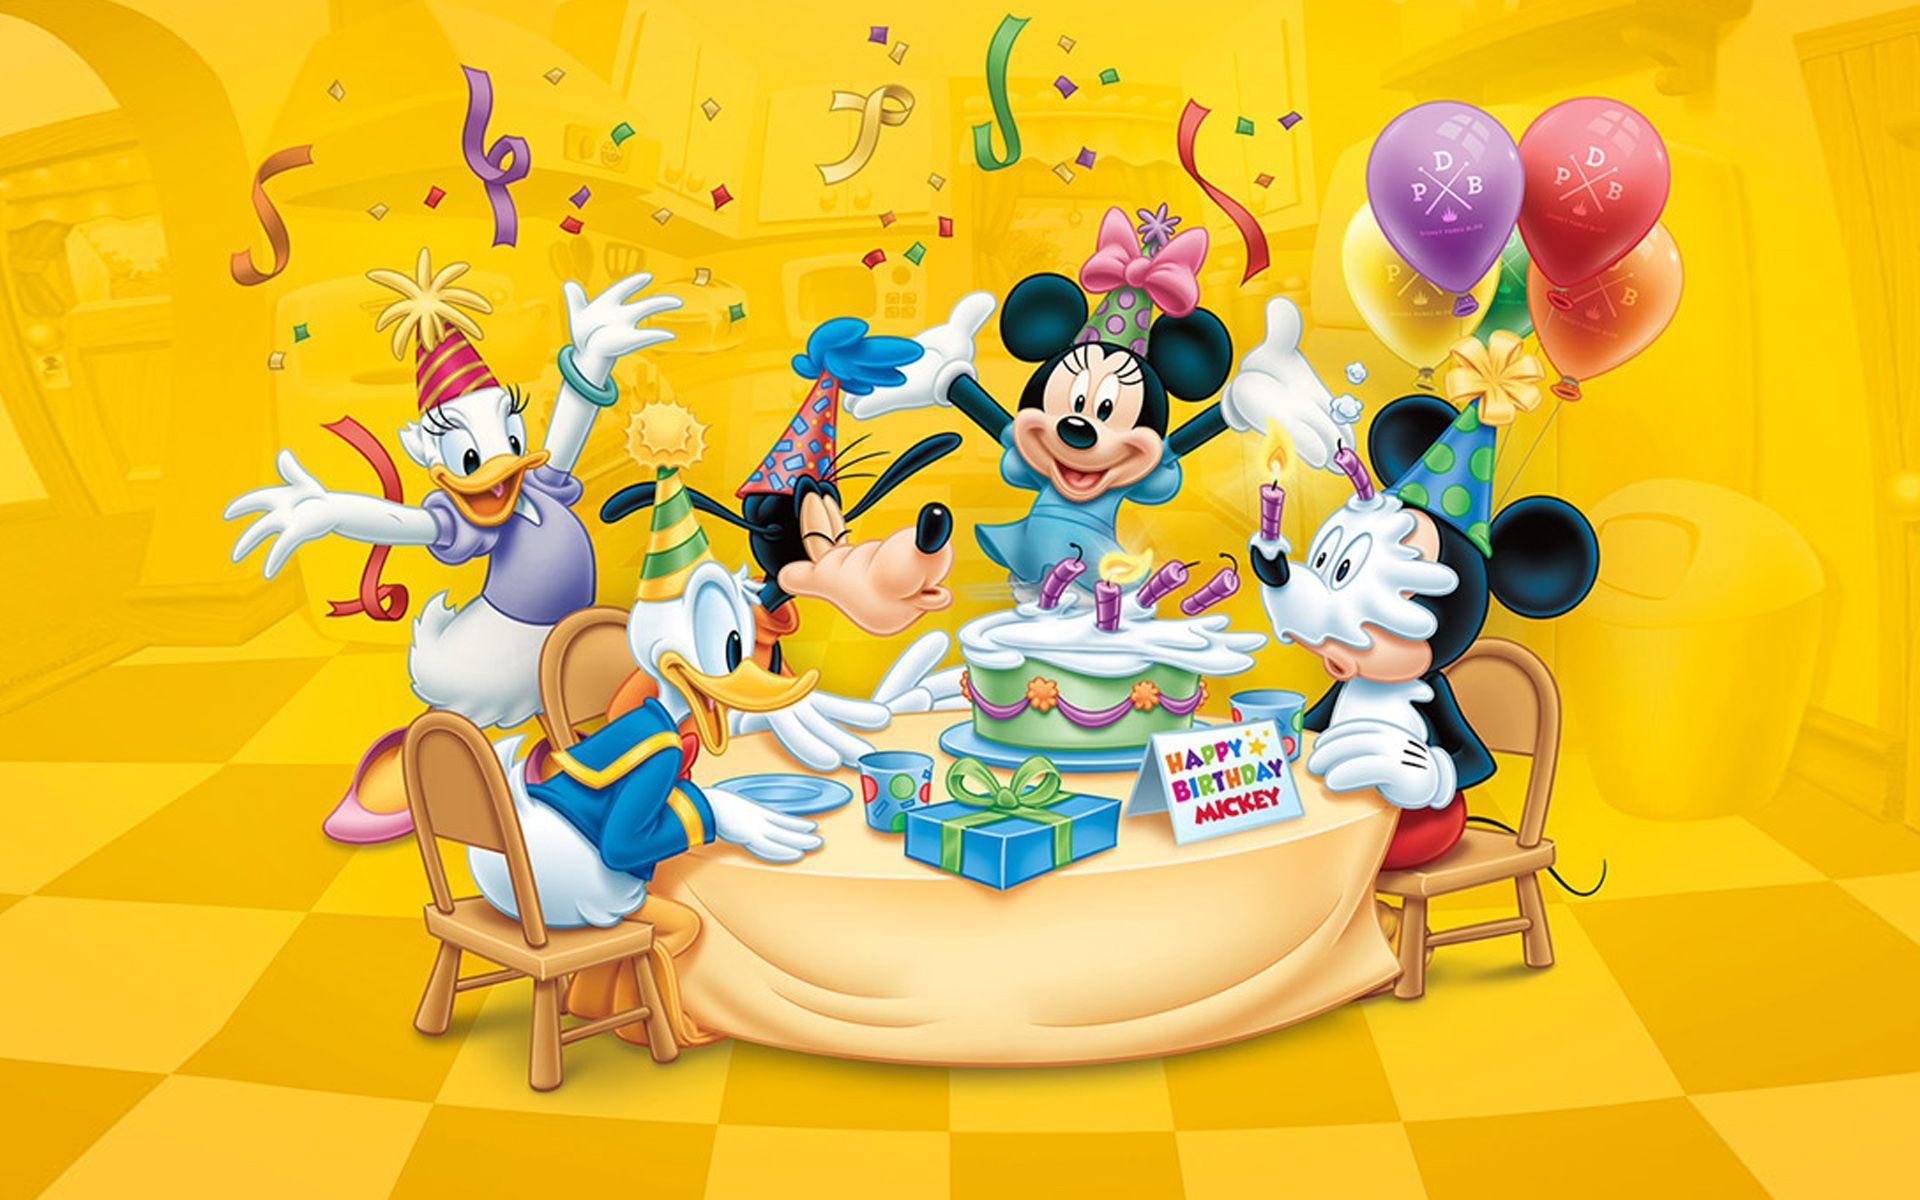 Happy Birthday Mickey Celebration Birthday Cake Balloon Candles